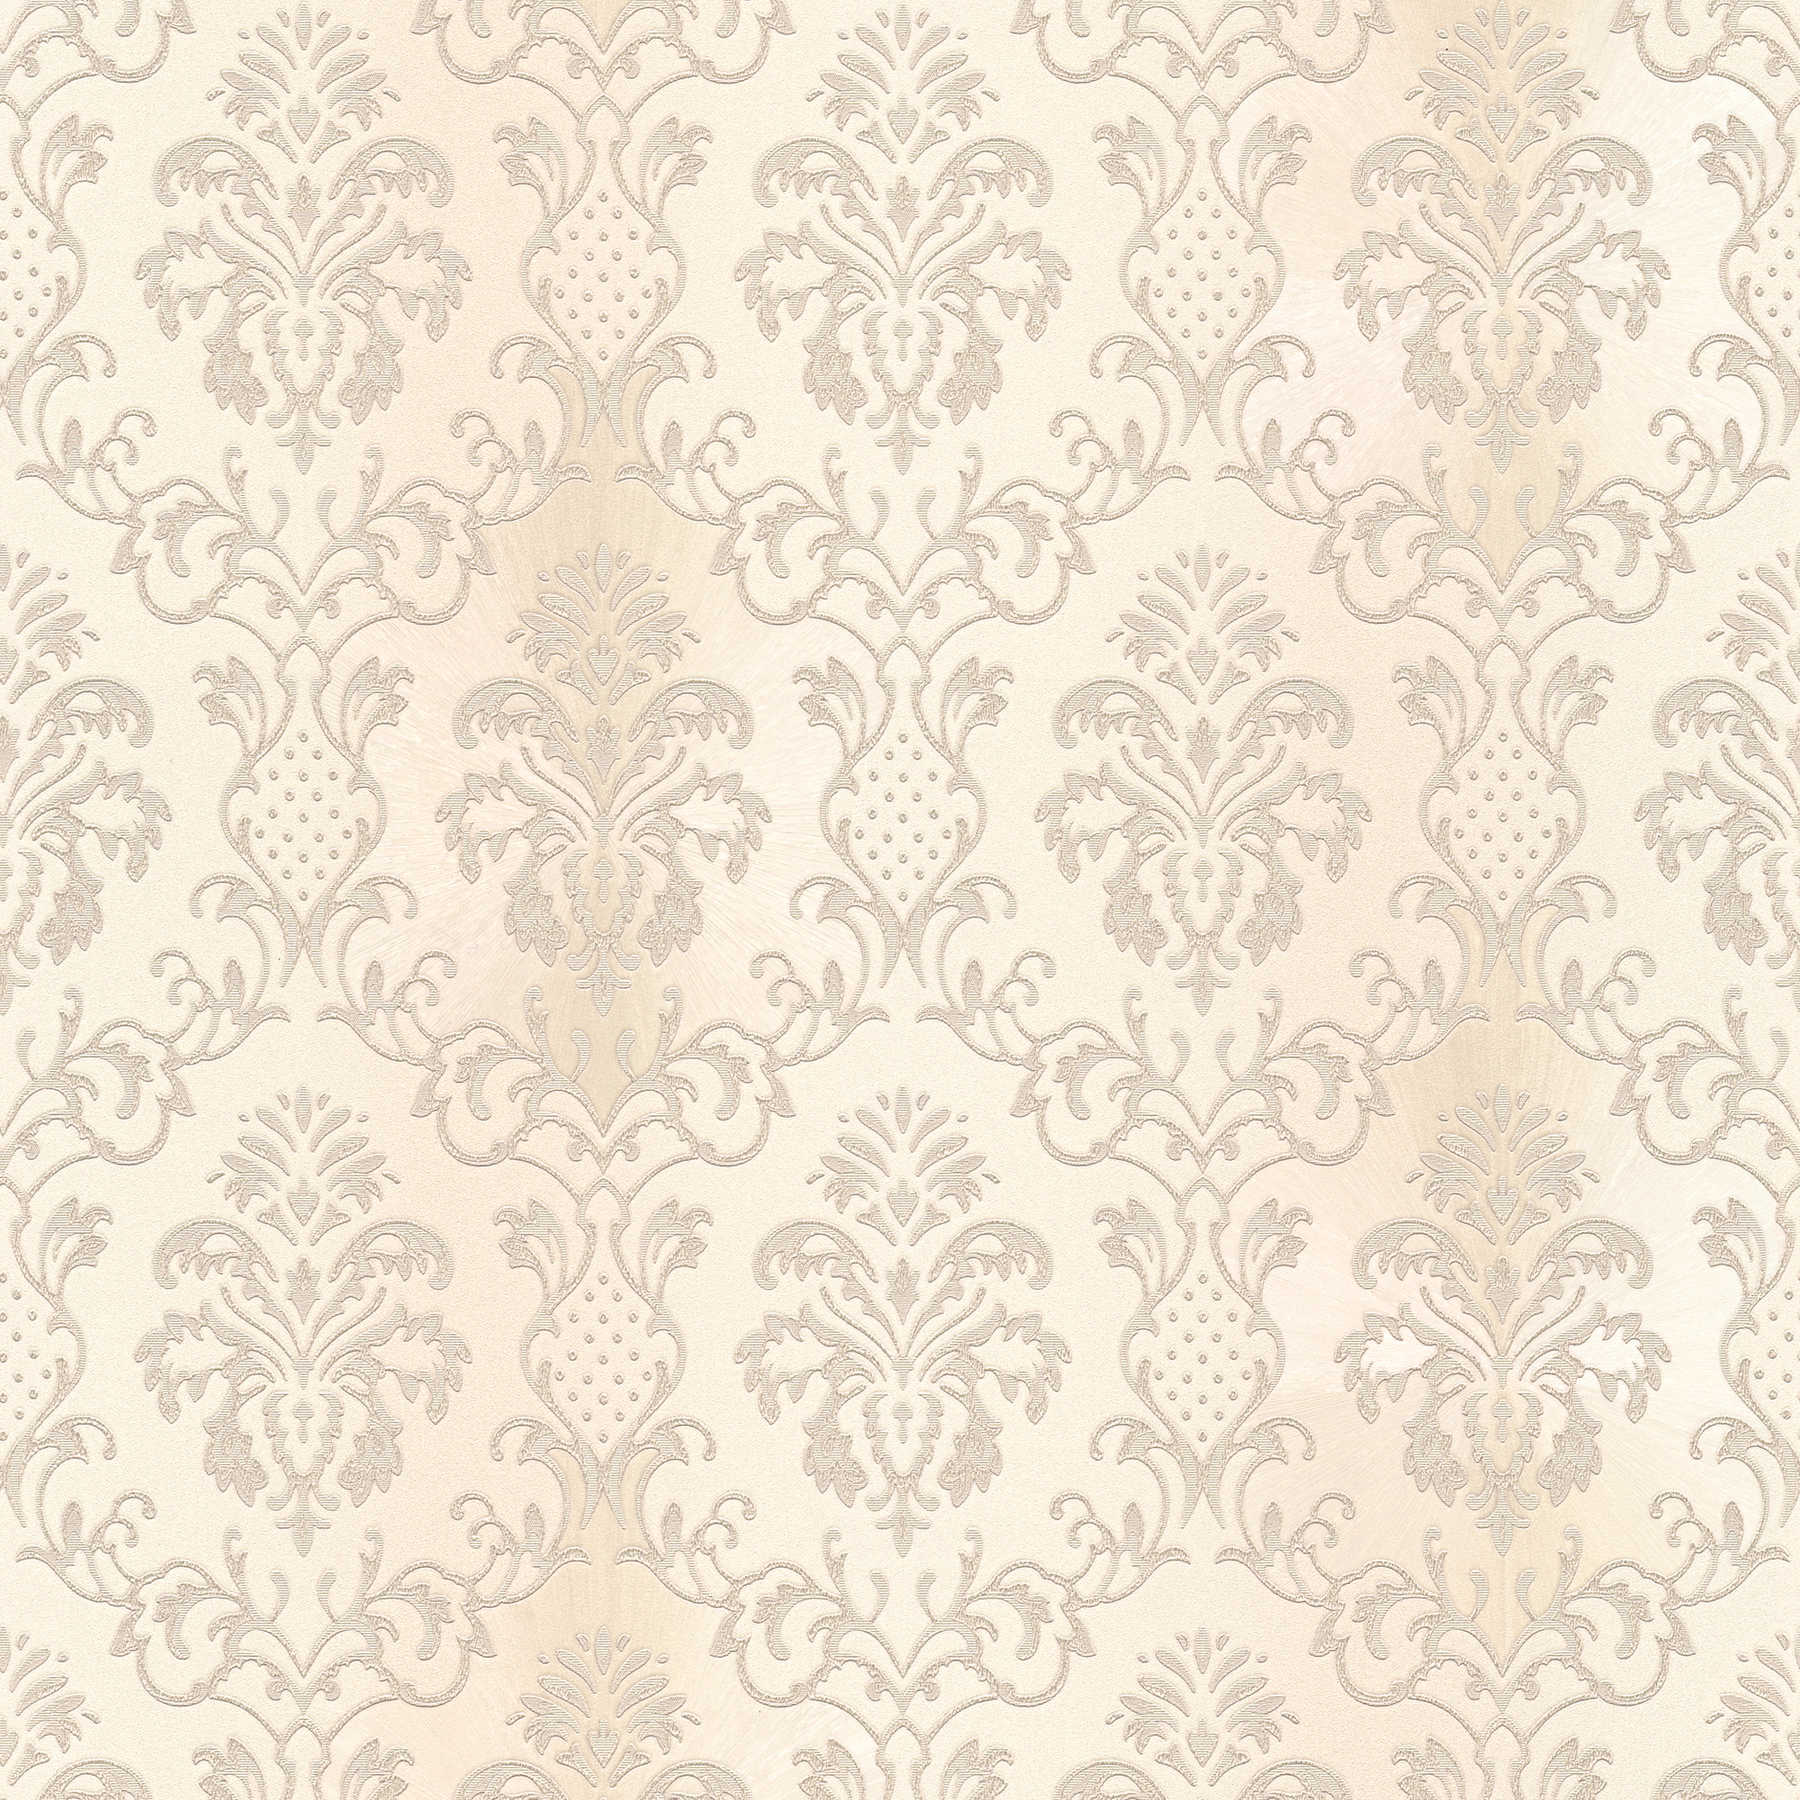 Ornament wallpaper Colonial Style - cream, grey
